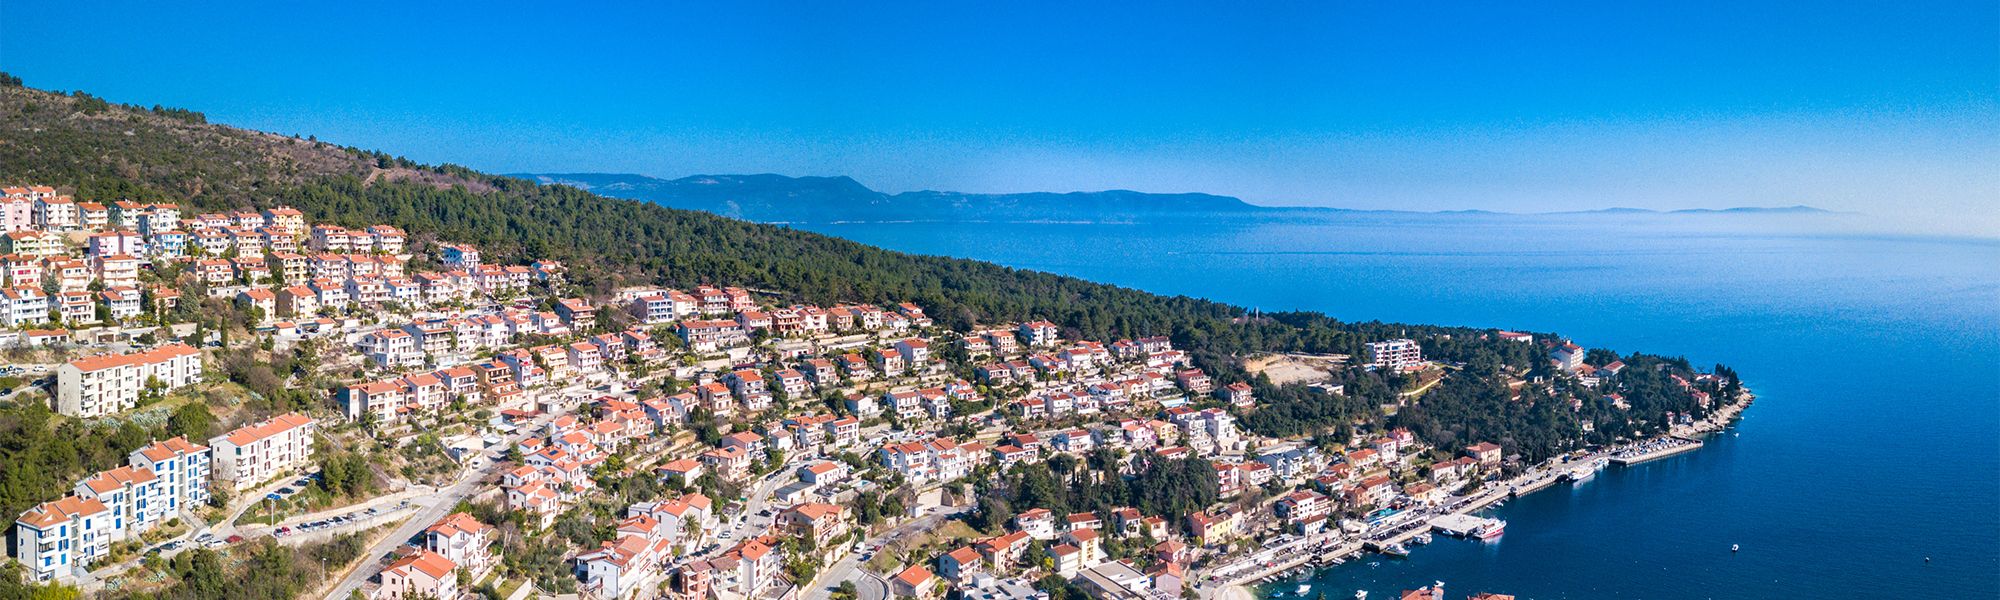 tourhub | Just Go Holidays | Croatia's Istrian Riviera 